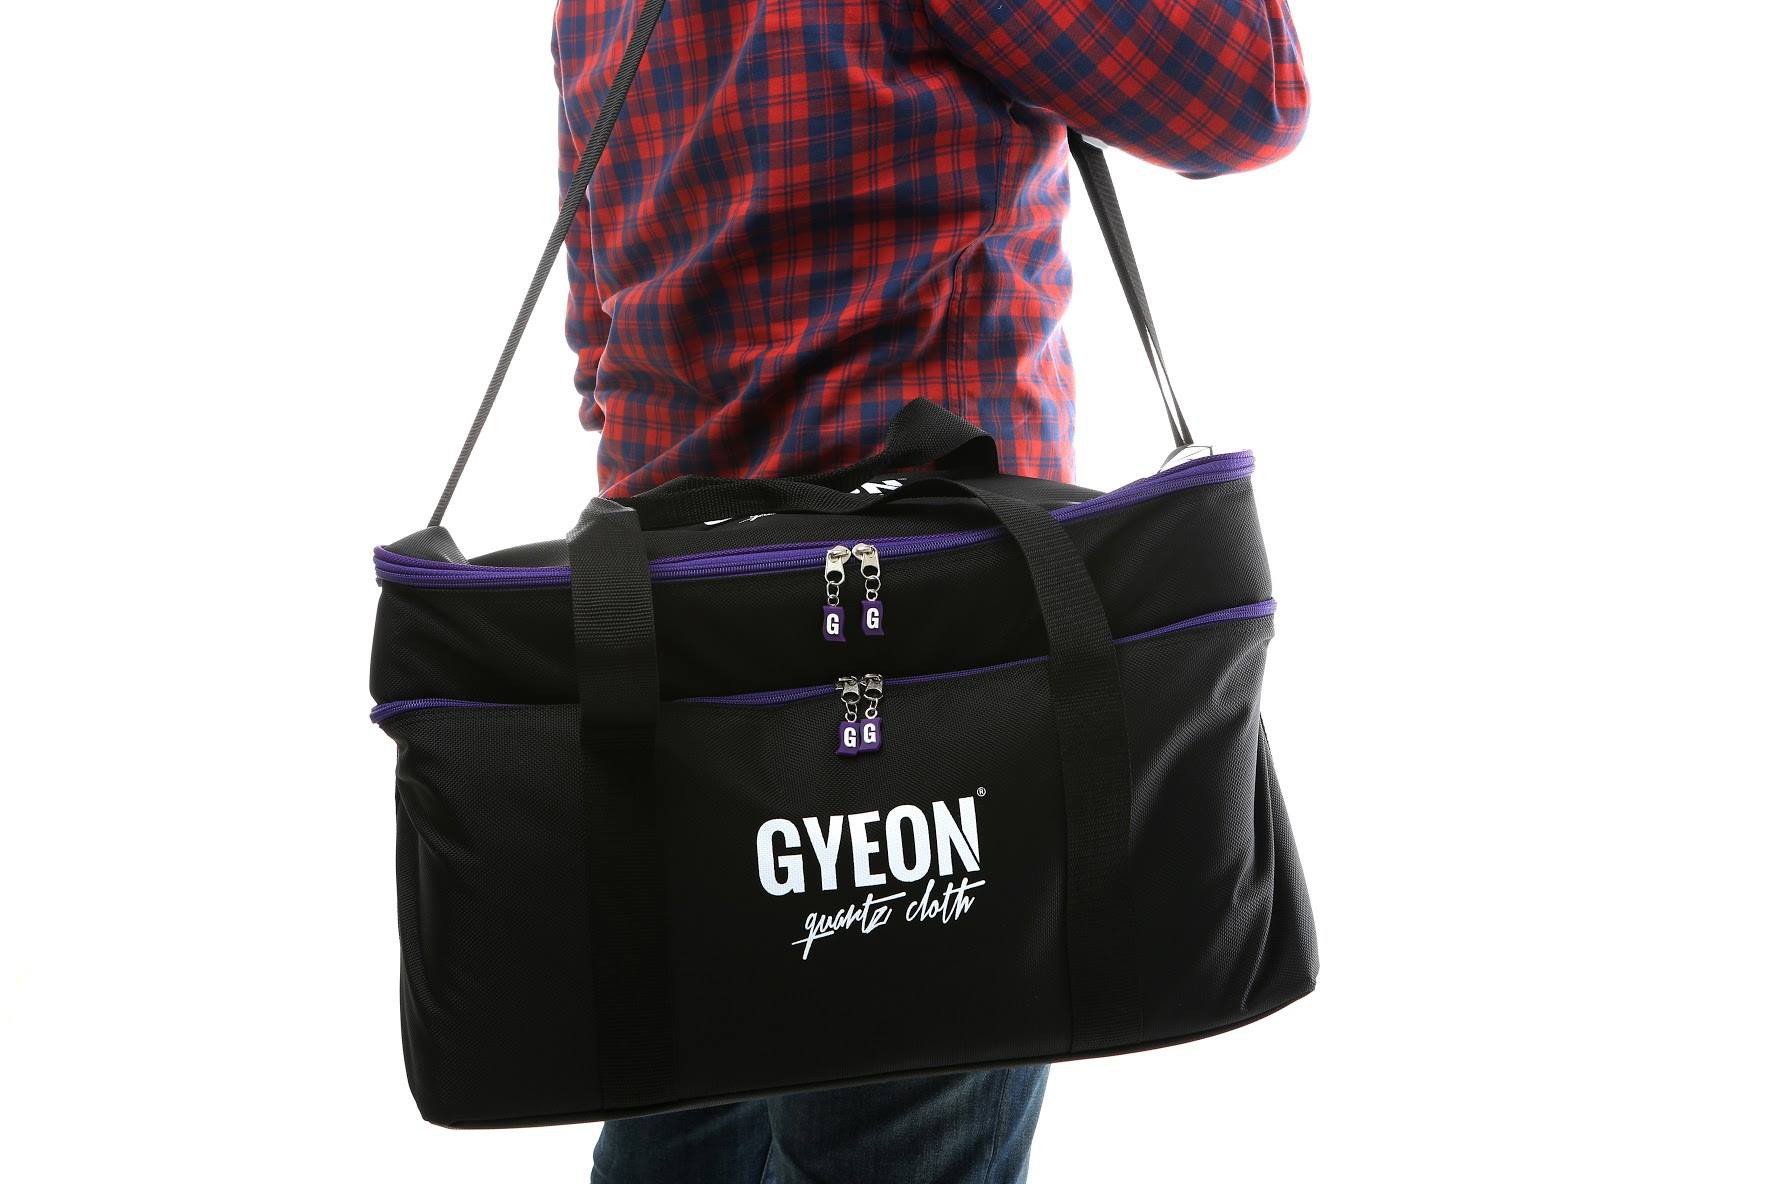 Gyeon q2m detail Bag small. Сумка детейлера 3d DBAG L-43. Gyeon сумка для выездного детейлинга. Gyeon detail Bag small - сумка детейлера (маленькая).